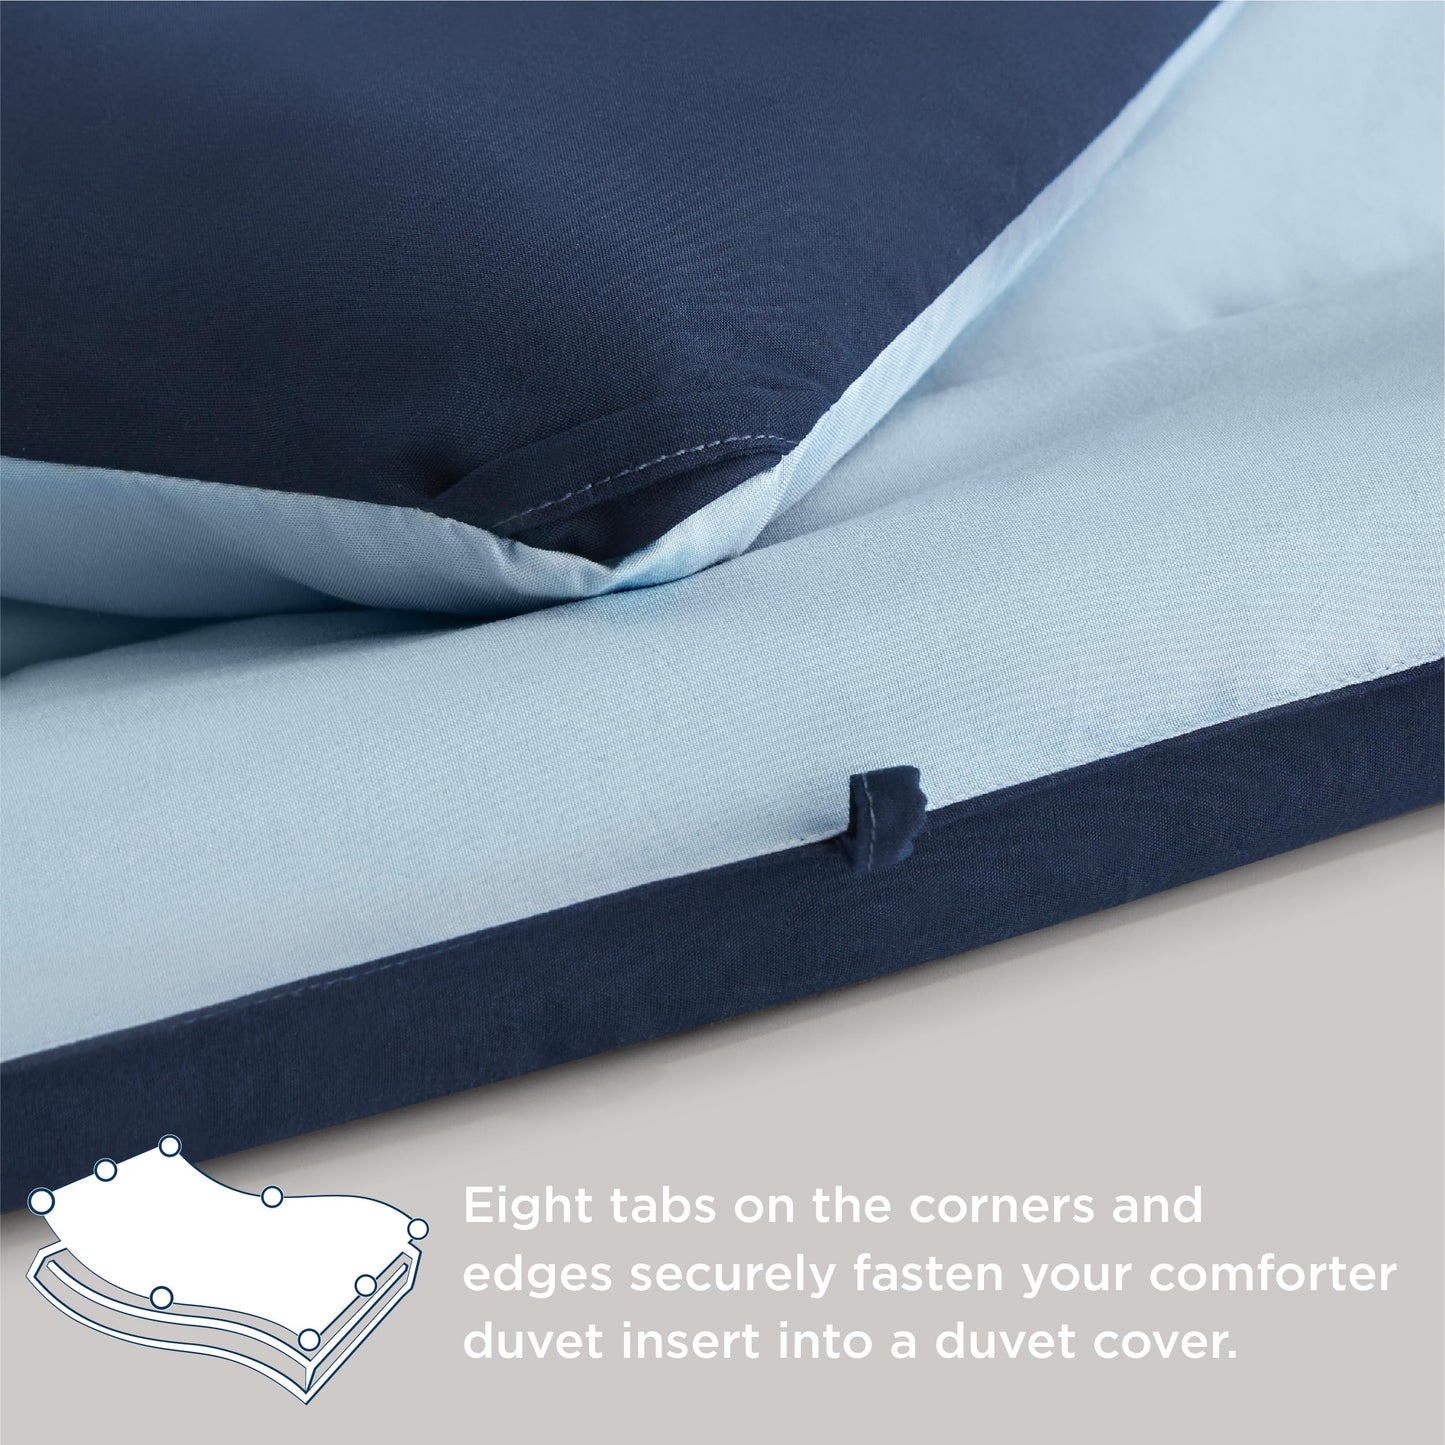 Bedsure Twin XL Comforter Duvet Insert Dorm Bedding - Blue/Light Blue Extra Long Twin Comforter, Quilted All Season Duvet with Corner Tabs